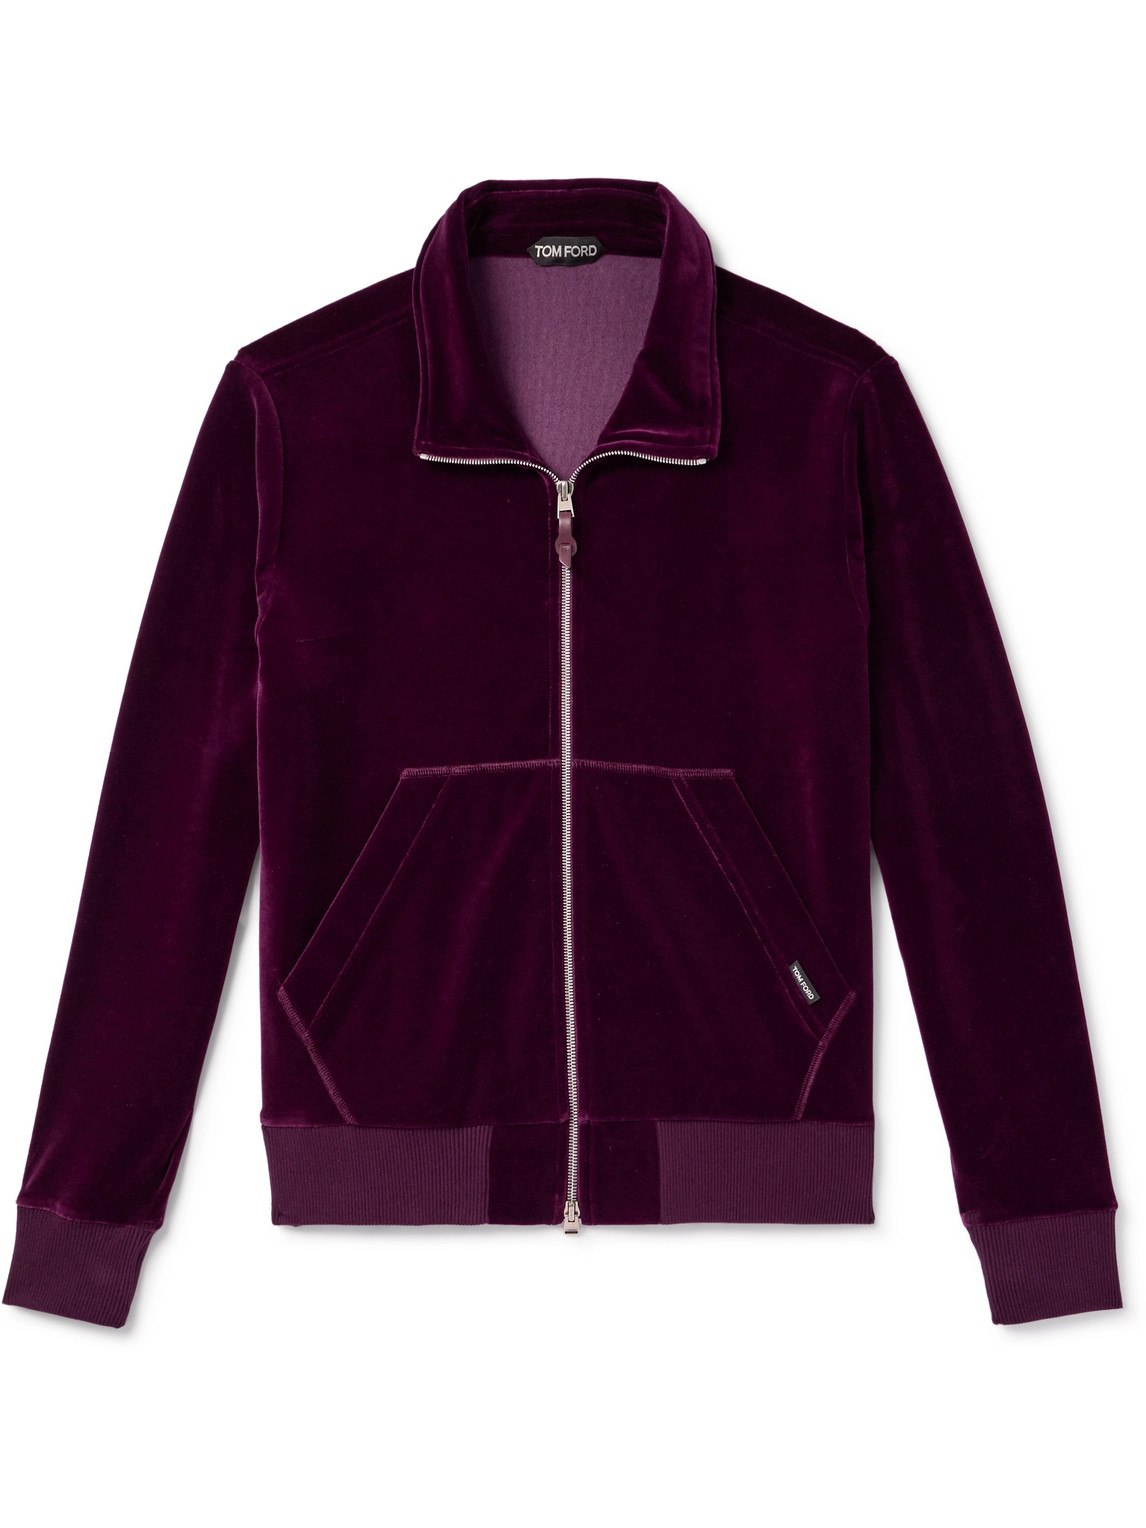 TOM FORD - Cotton-Blend Velour Track Jacket - Men - Purple - IT 48 von TOM FORD